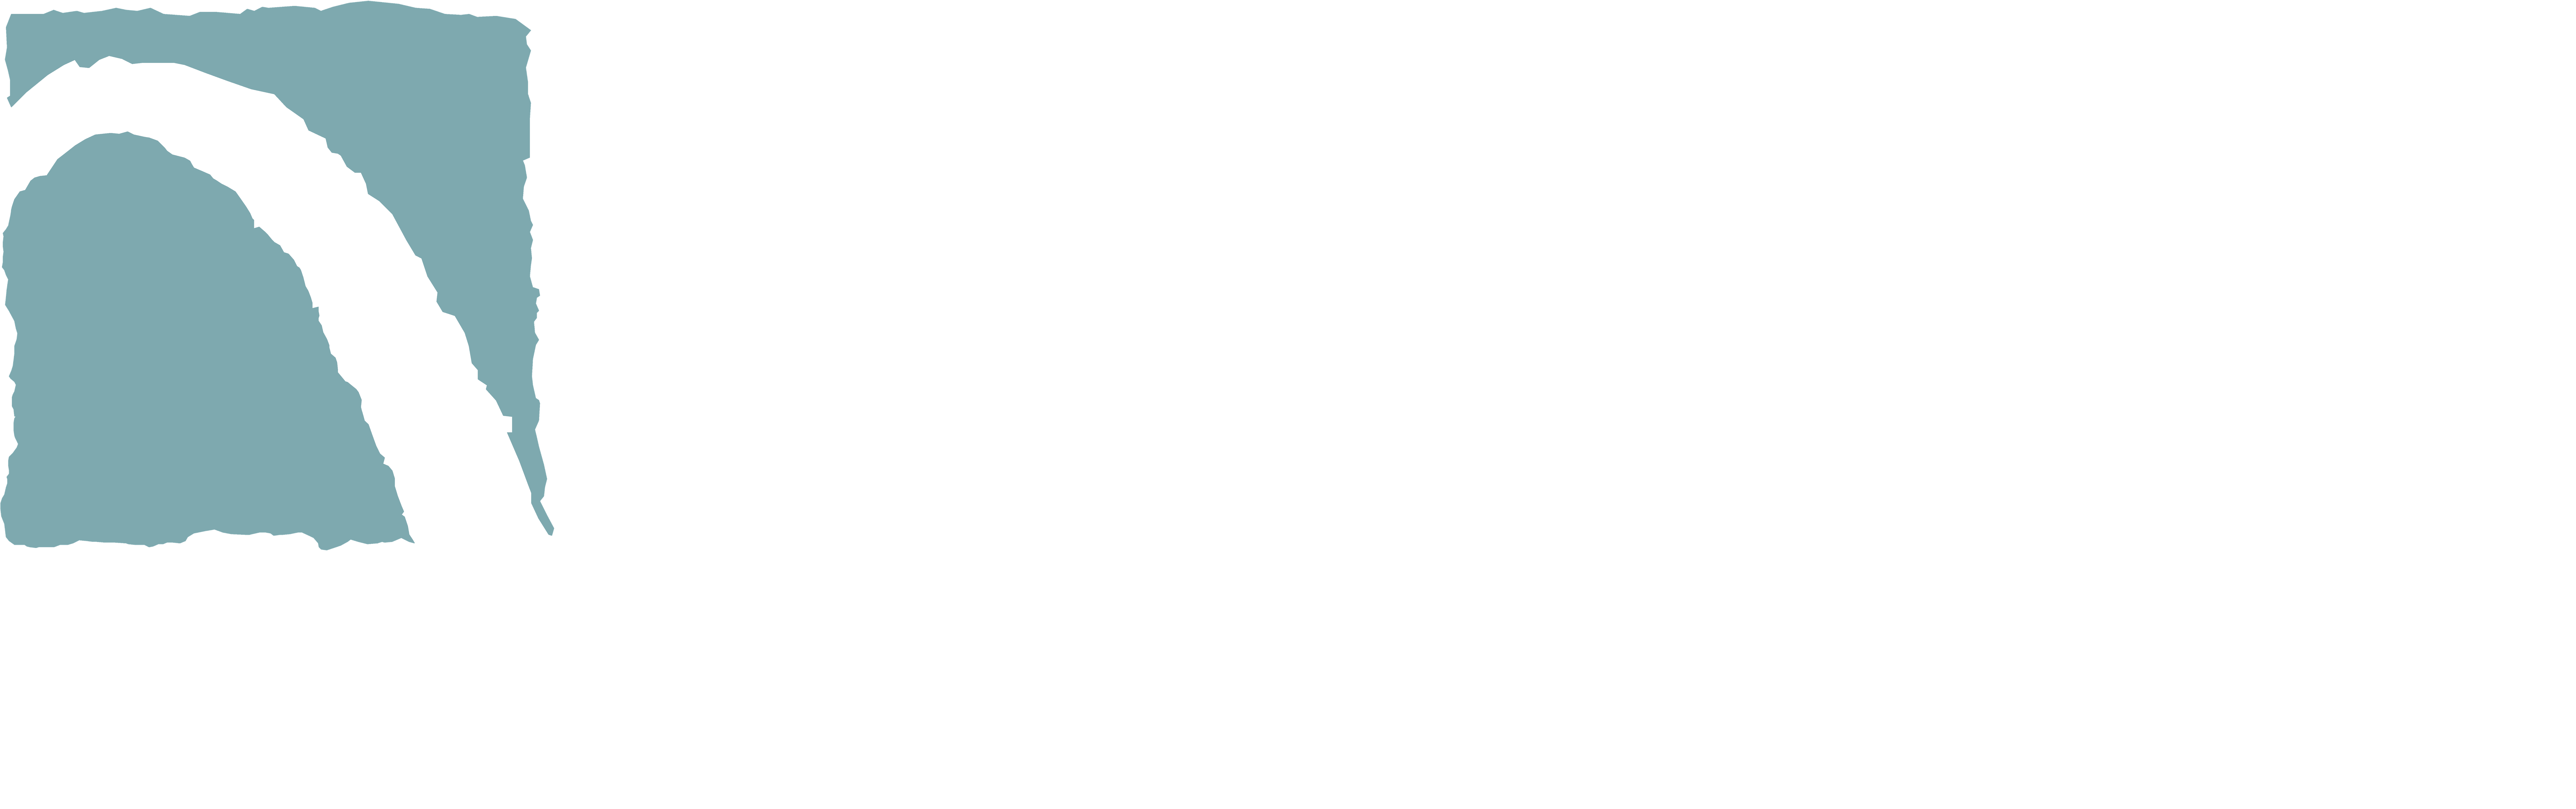 Studio d'ingegneria Lurati Muttoni Partner SA